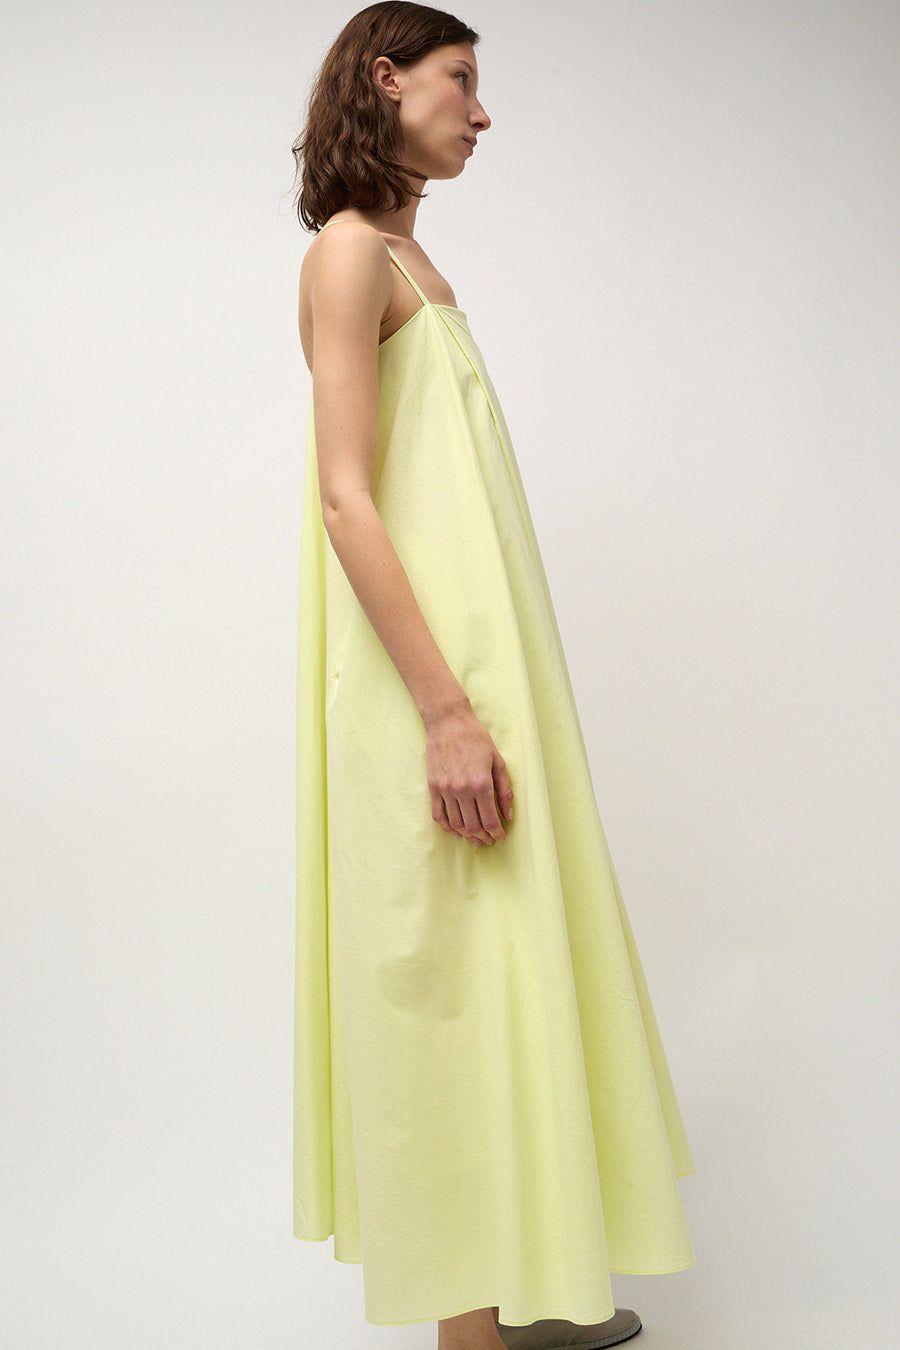 Sayaka Davis Strappy Dress in Soft Lime